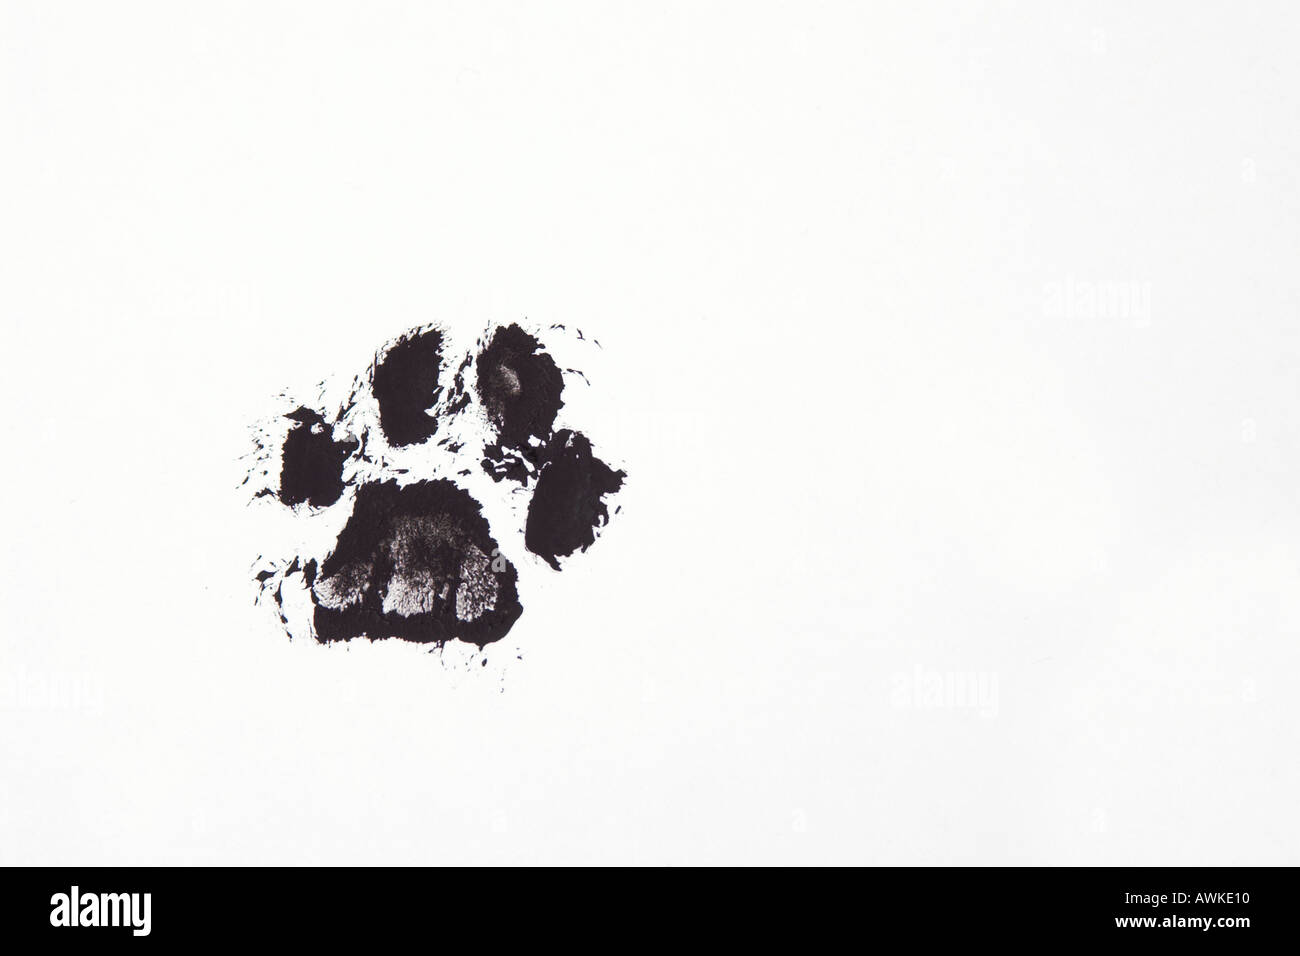 Wild Cat Paw Print Silhouette Stencil